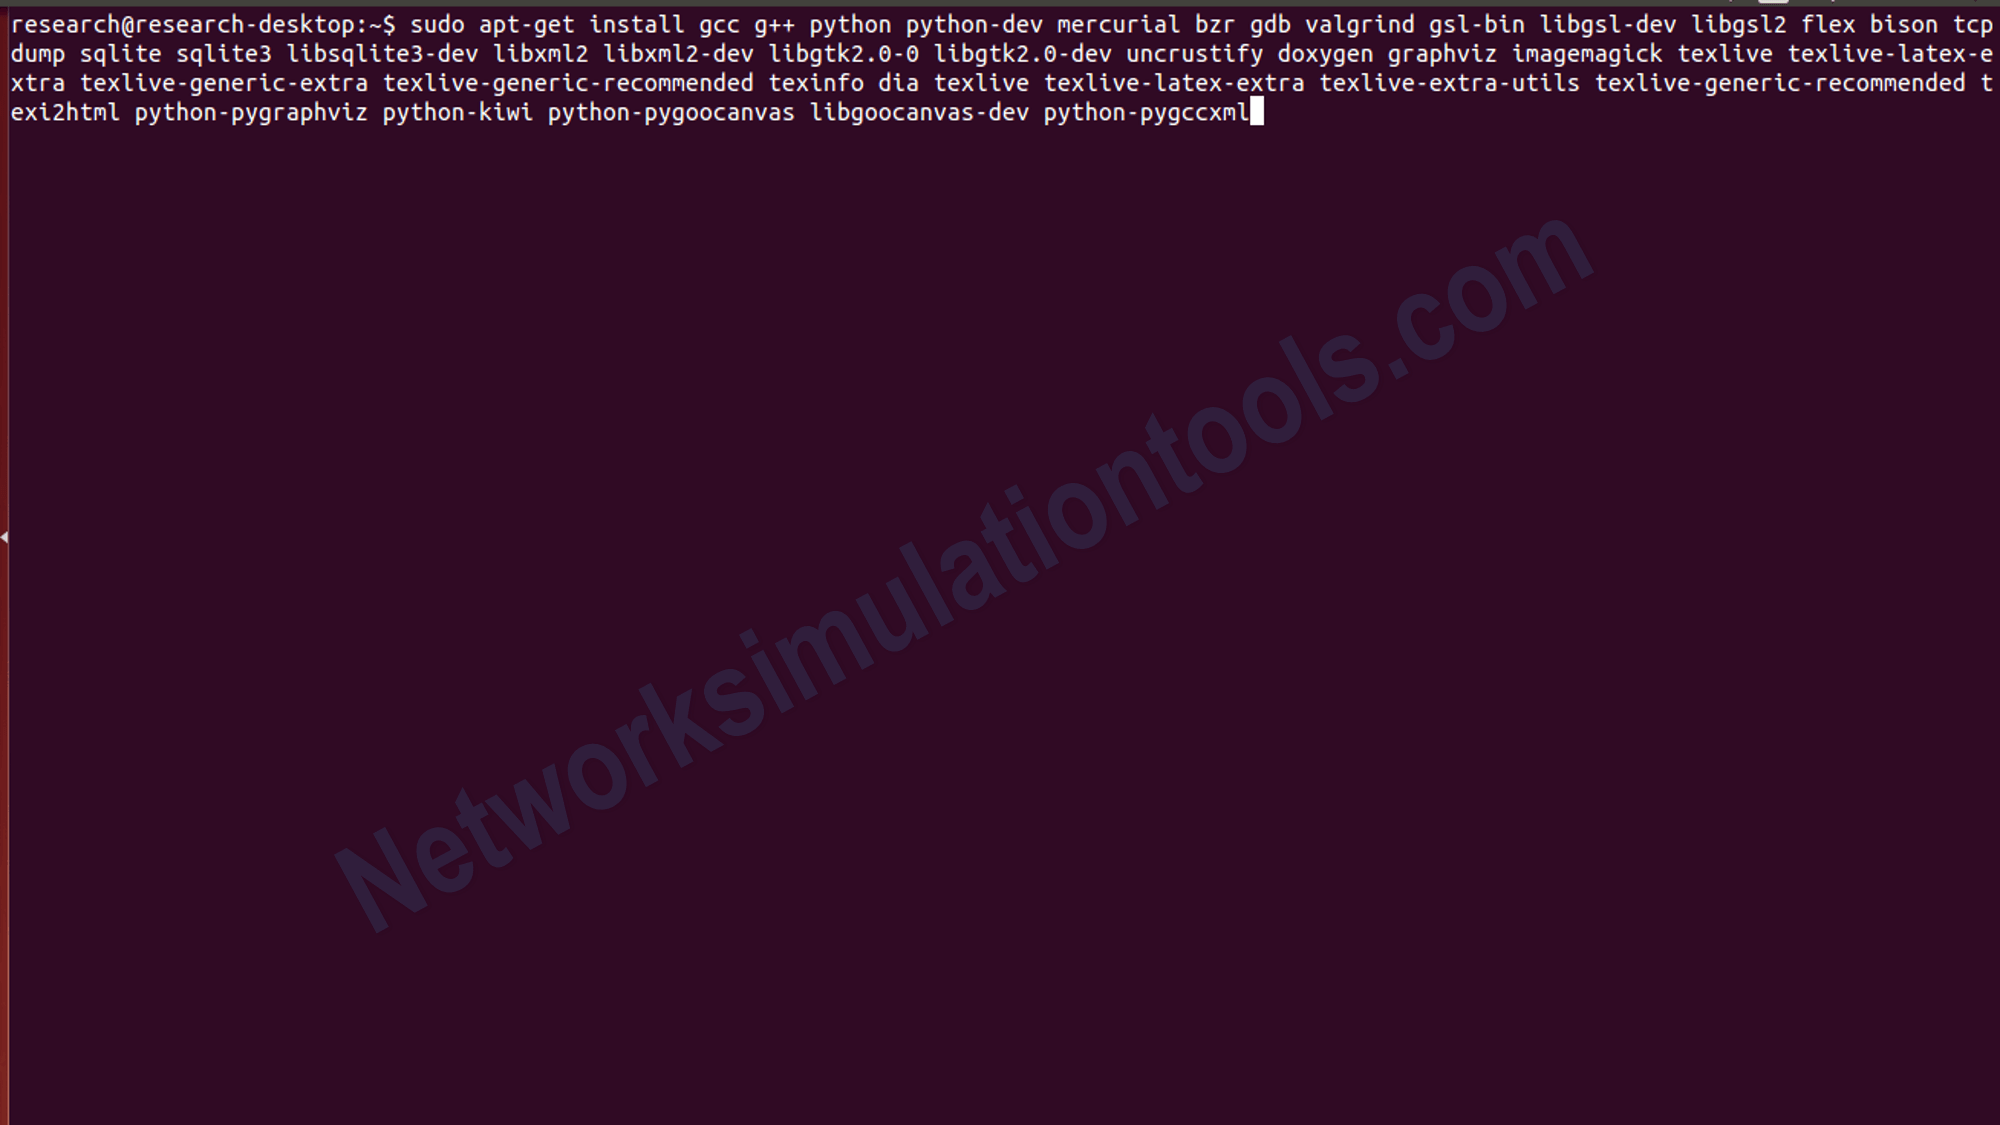 Installation of Virtual machine / Ubuntu 16.04 LTS